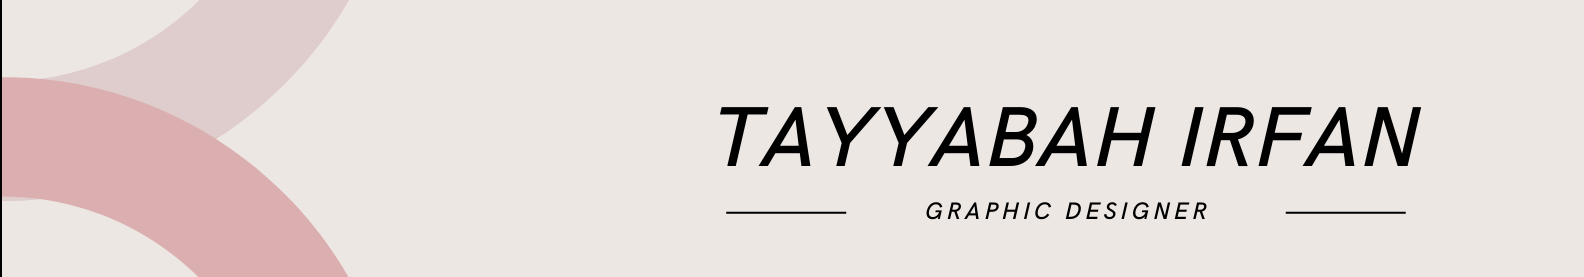 Banner de perfil de Tayyabah Irfan